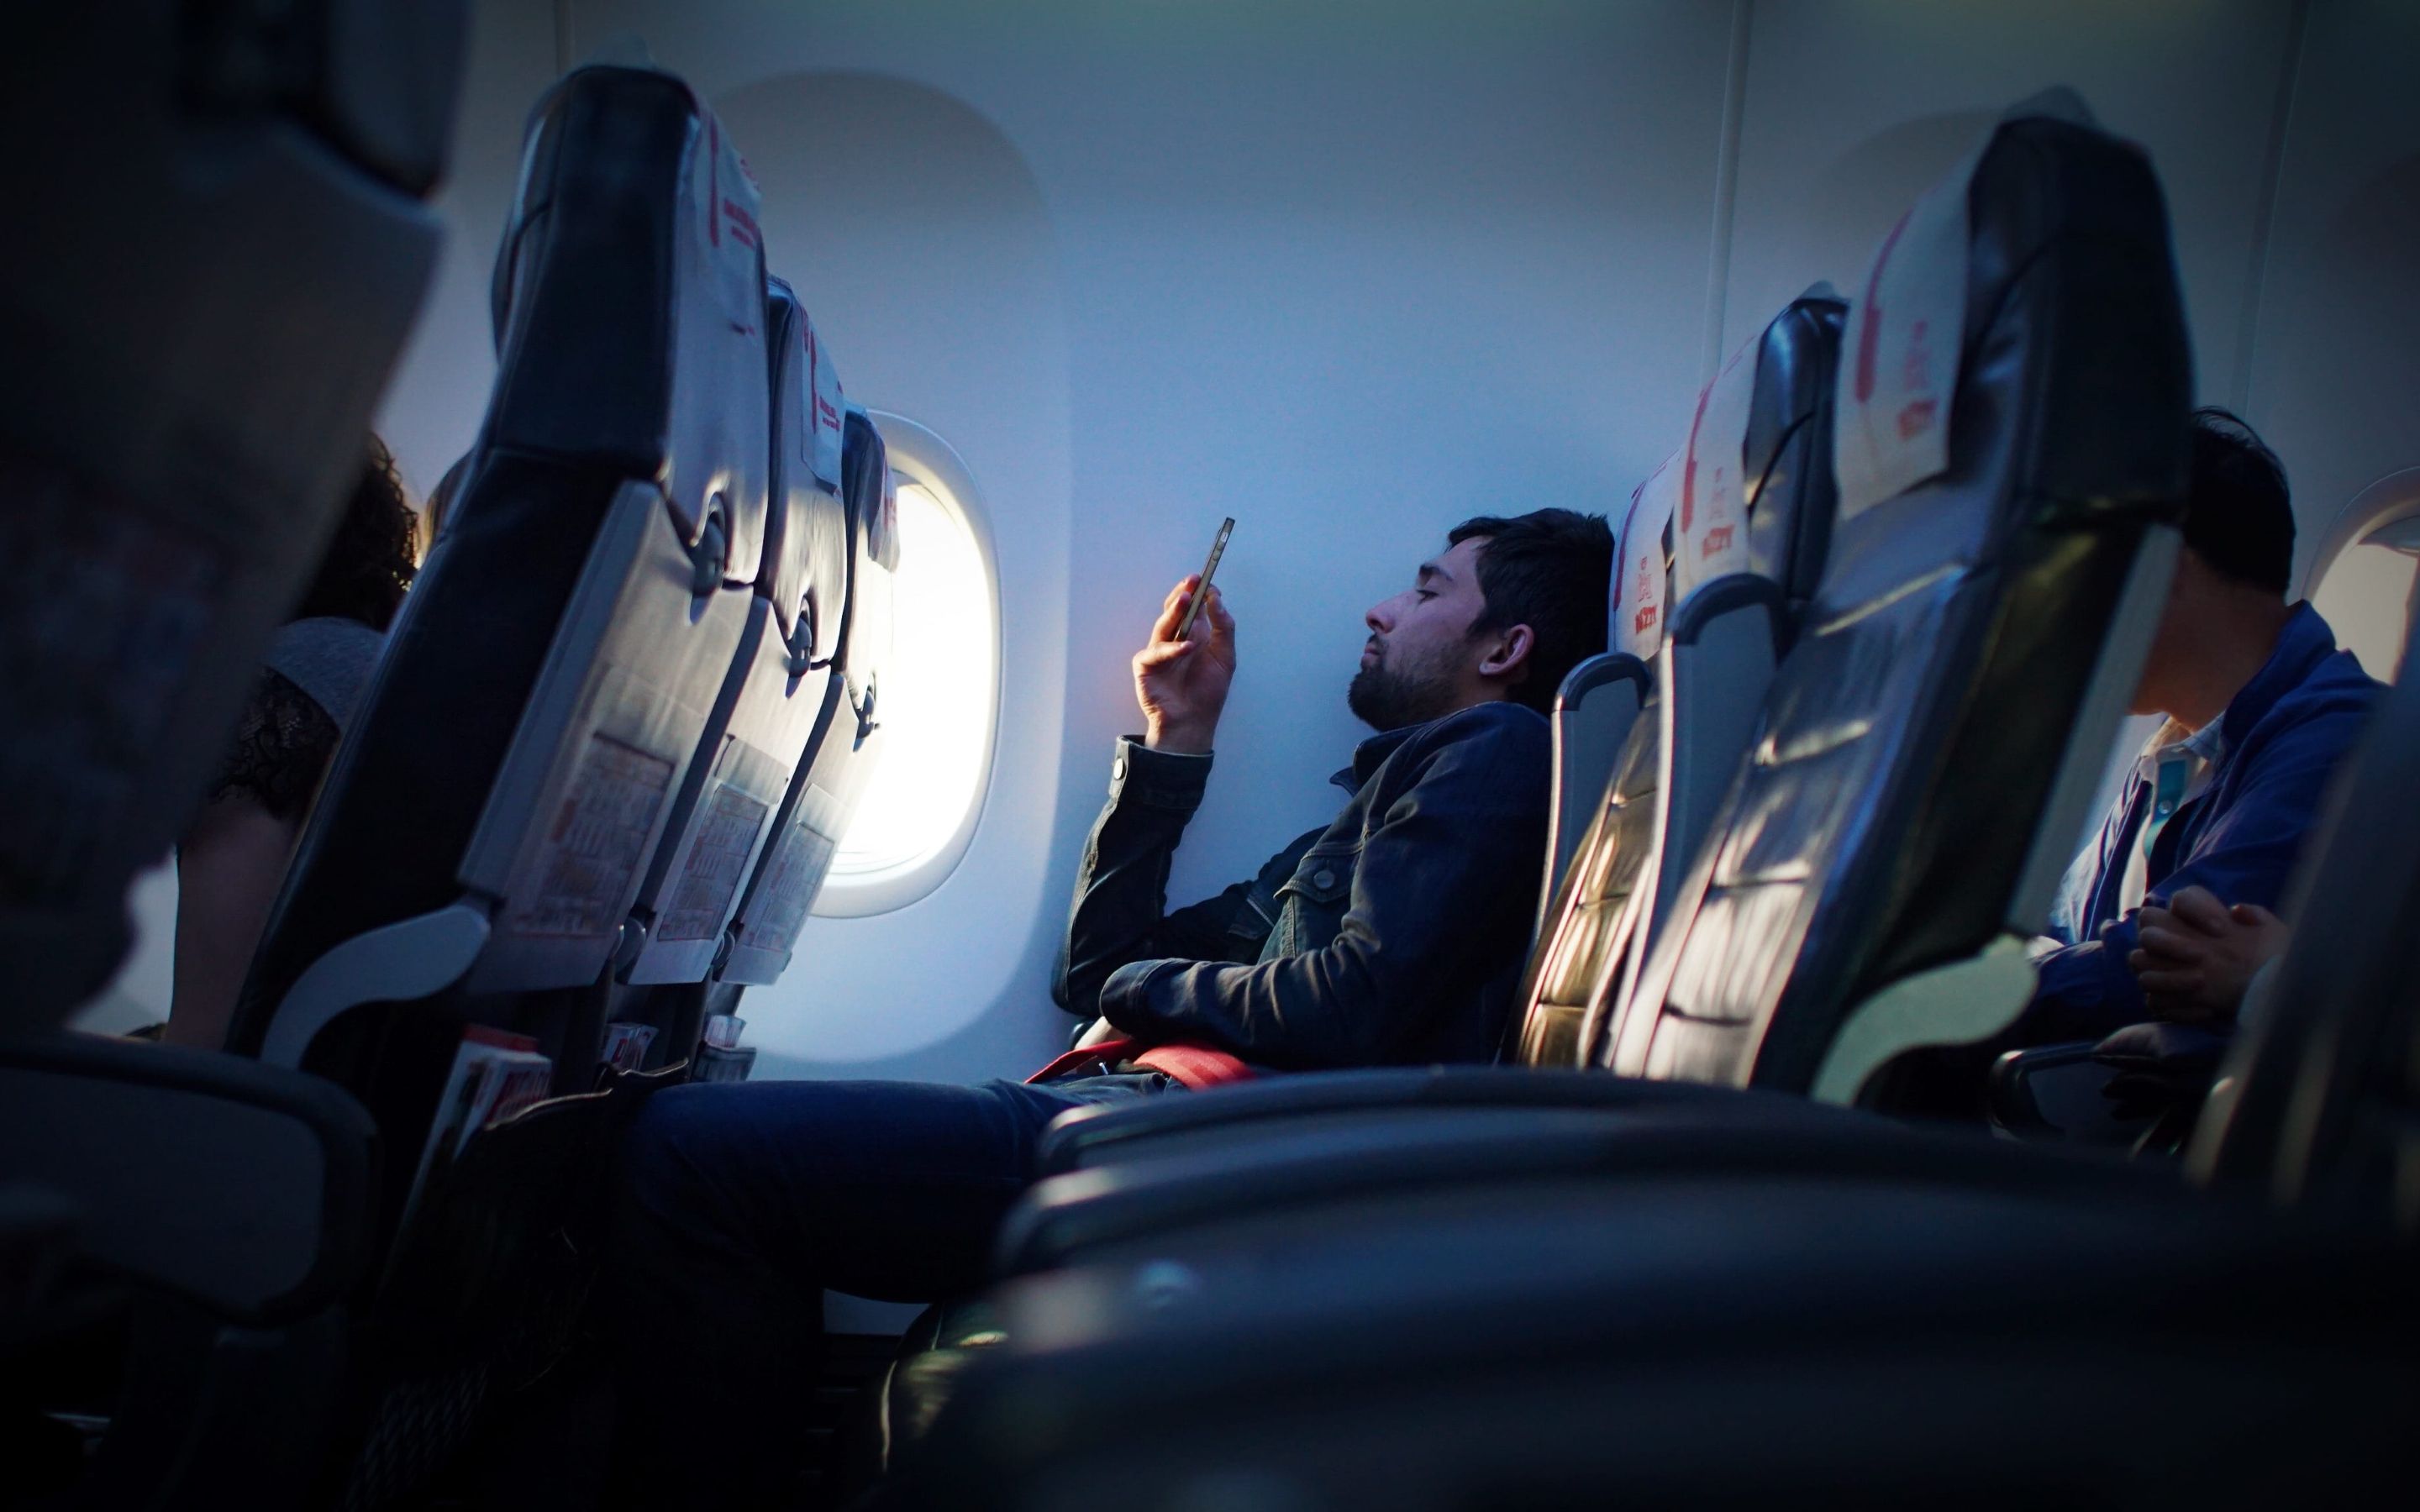 A Man using phone on plane.